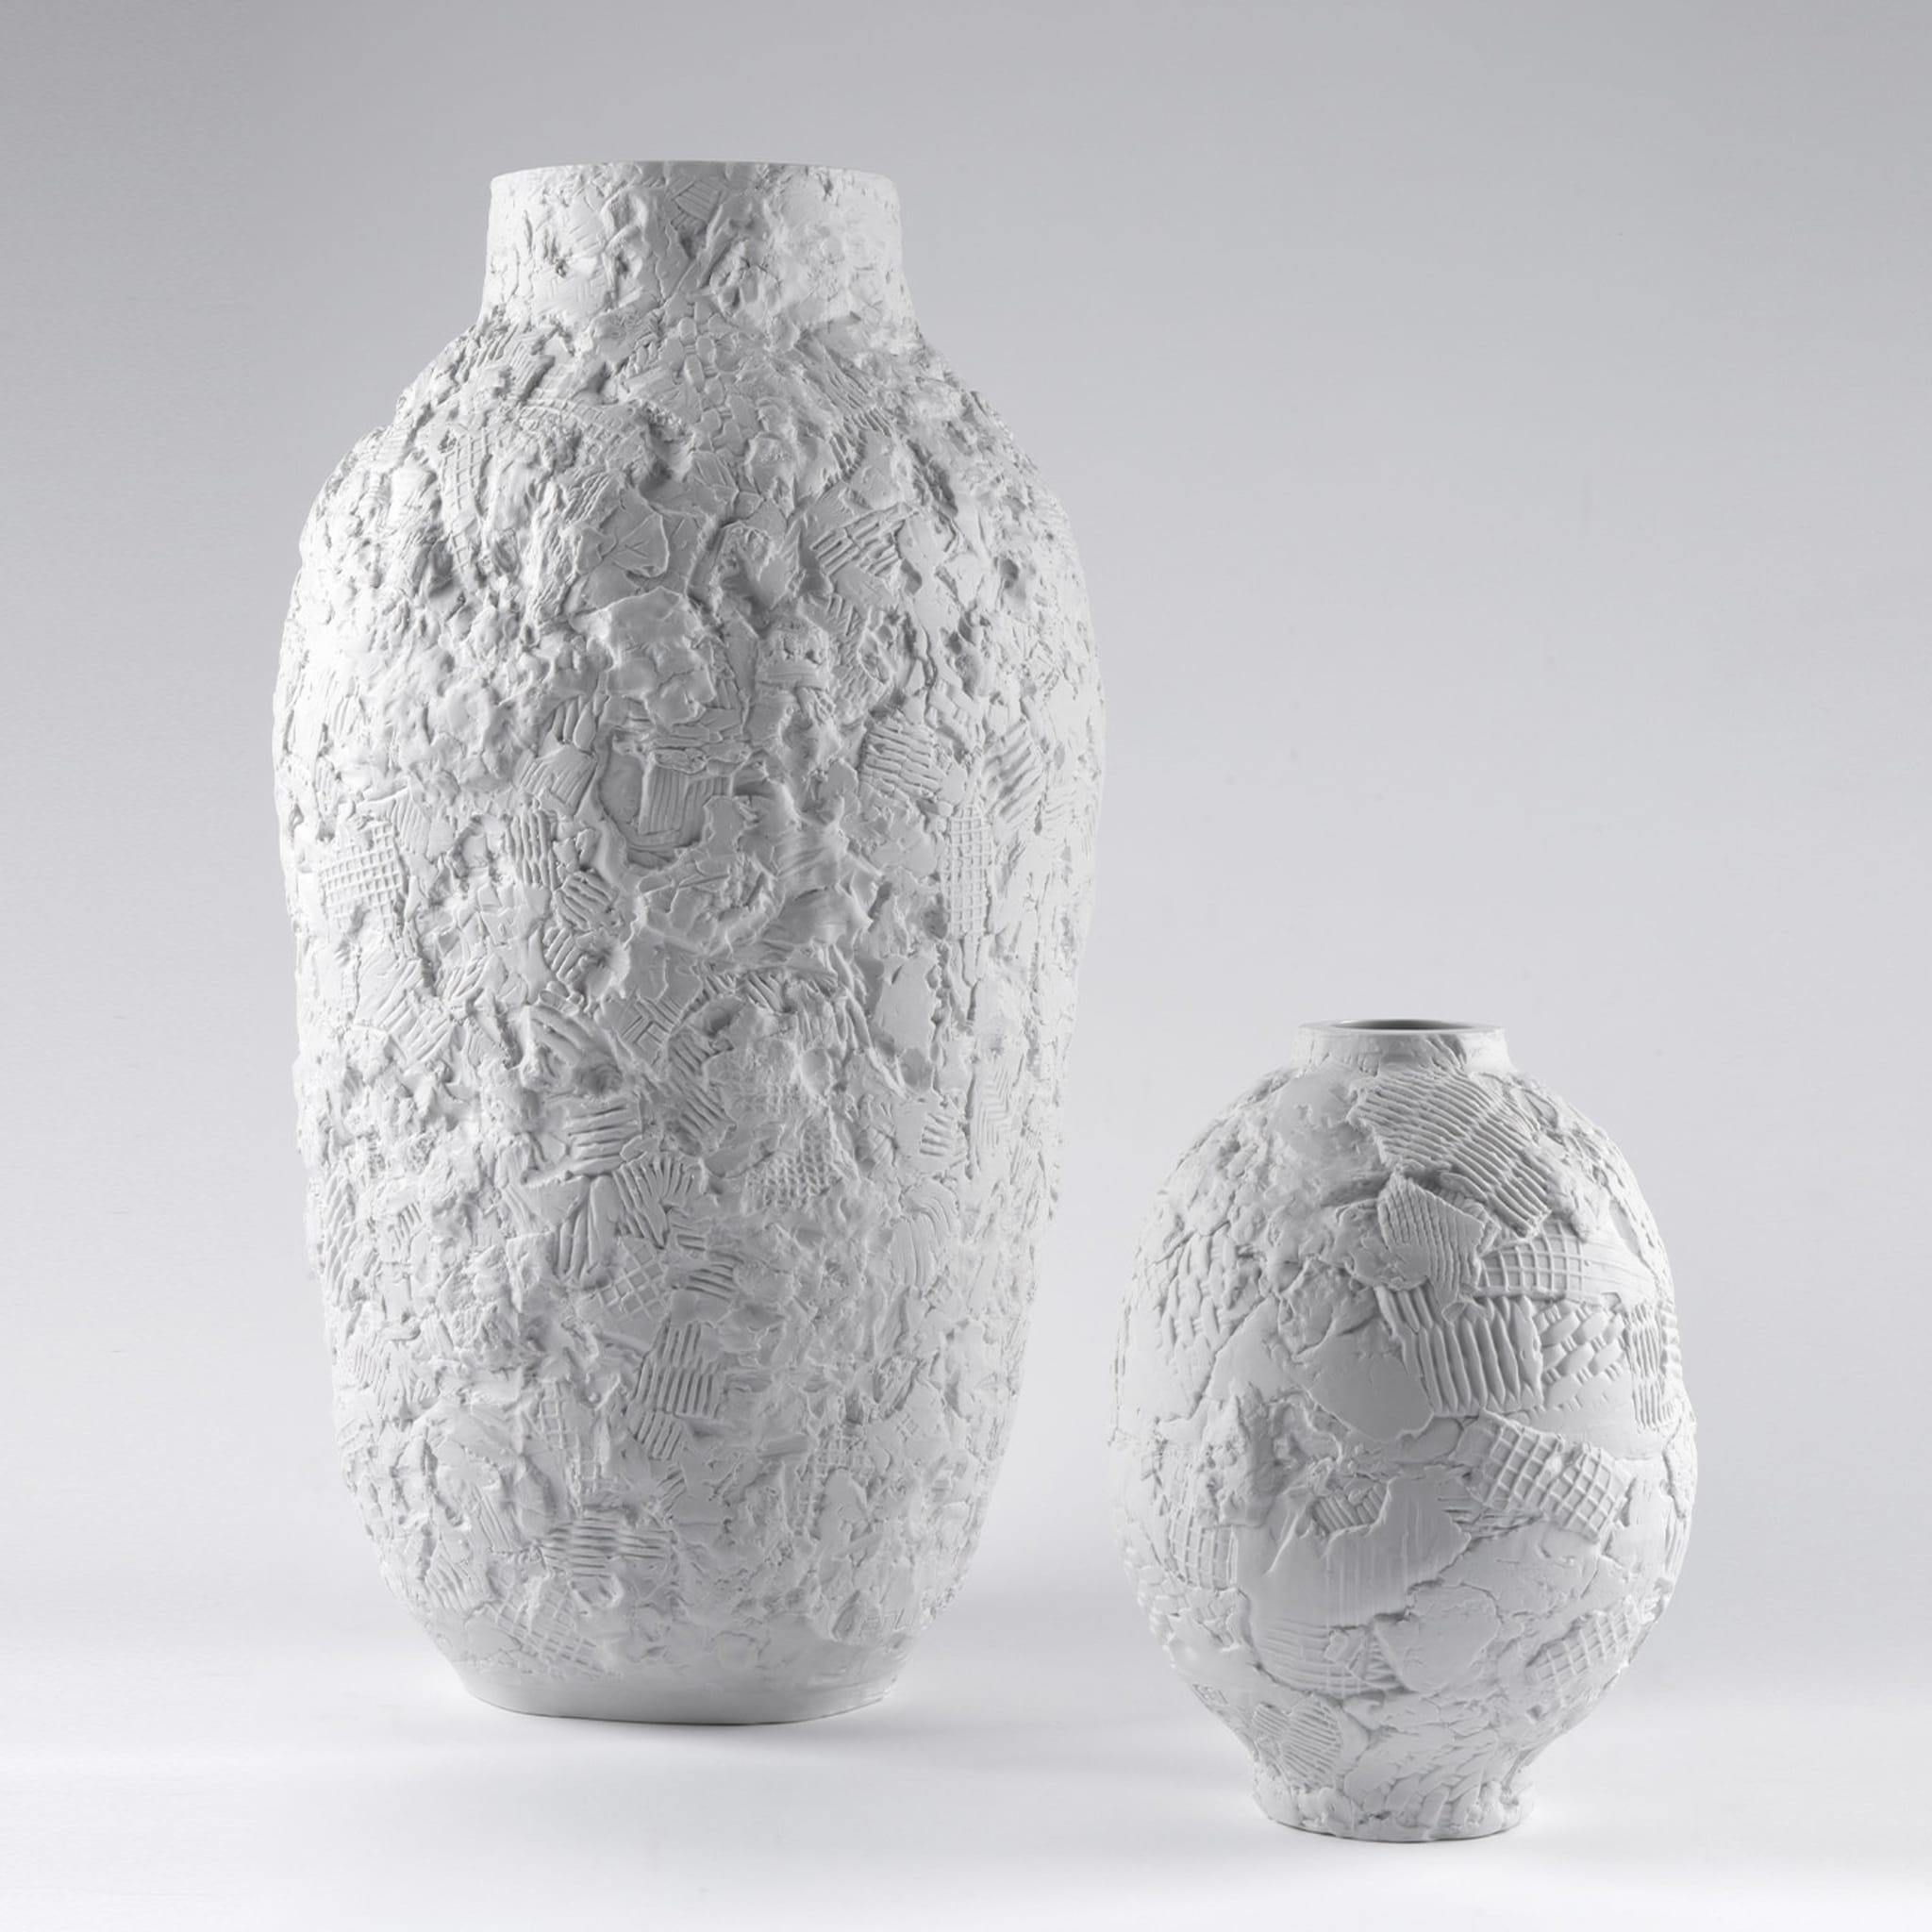 Esker Large Vase by Pol Polloniato - Alternative view 5